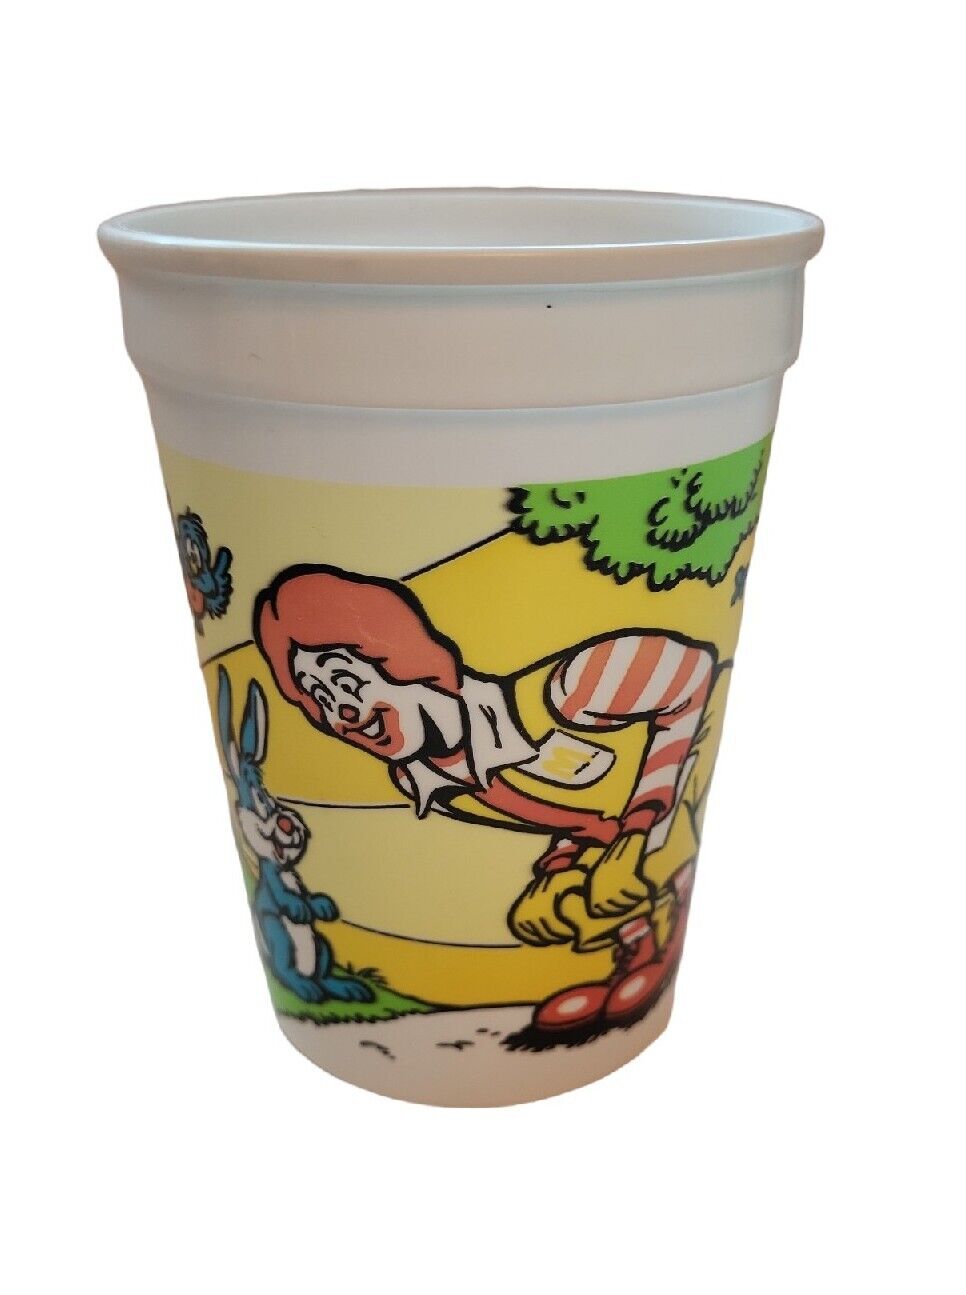 1990 McDonald\'s Kids Plastic Beverage Cup - Ronald McDonald - Breakfast Sunrise